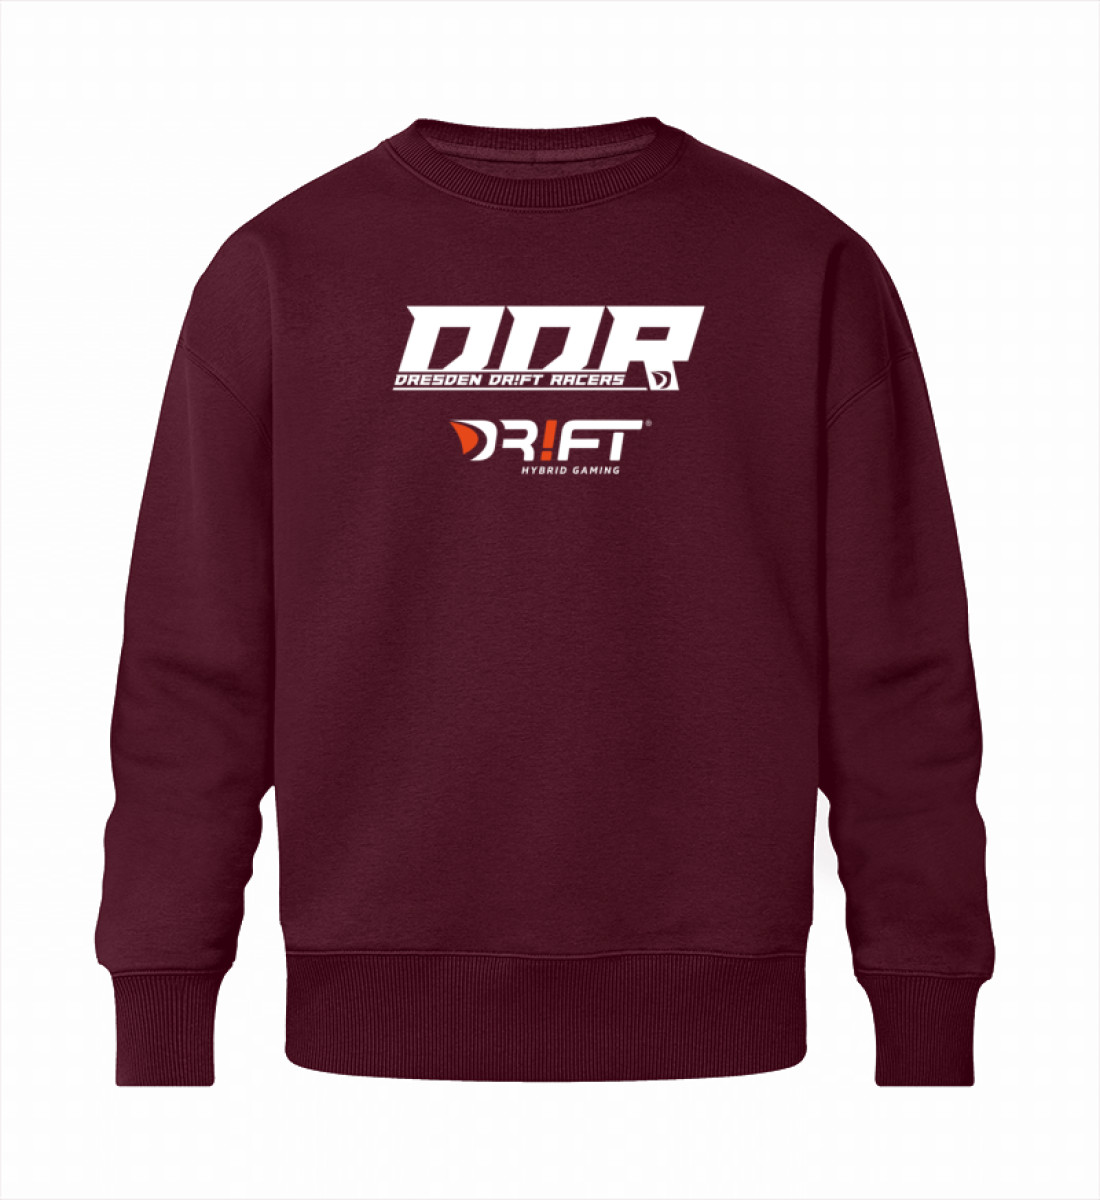 DDR Feel the Rush - Radder Relaxed Sweatshirt ST/ST-839